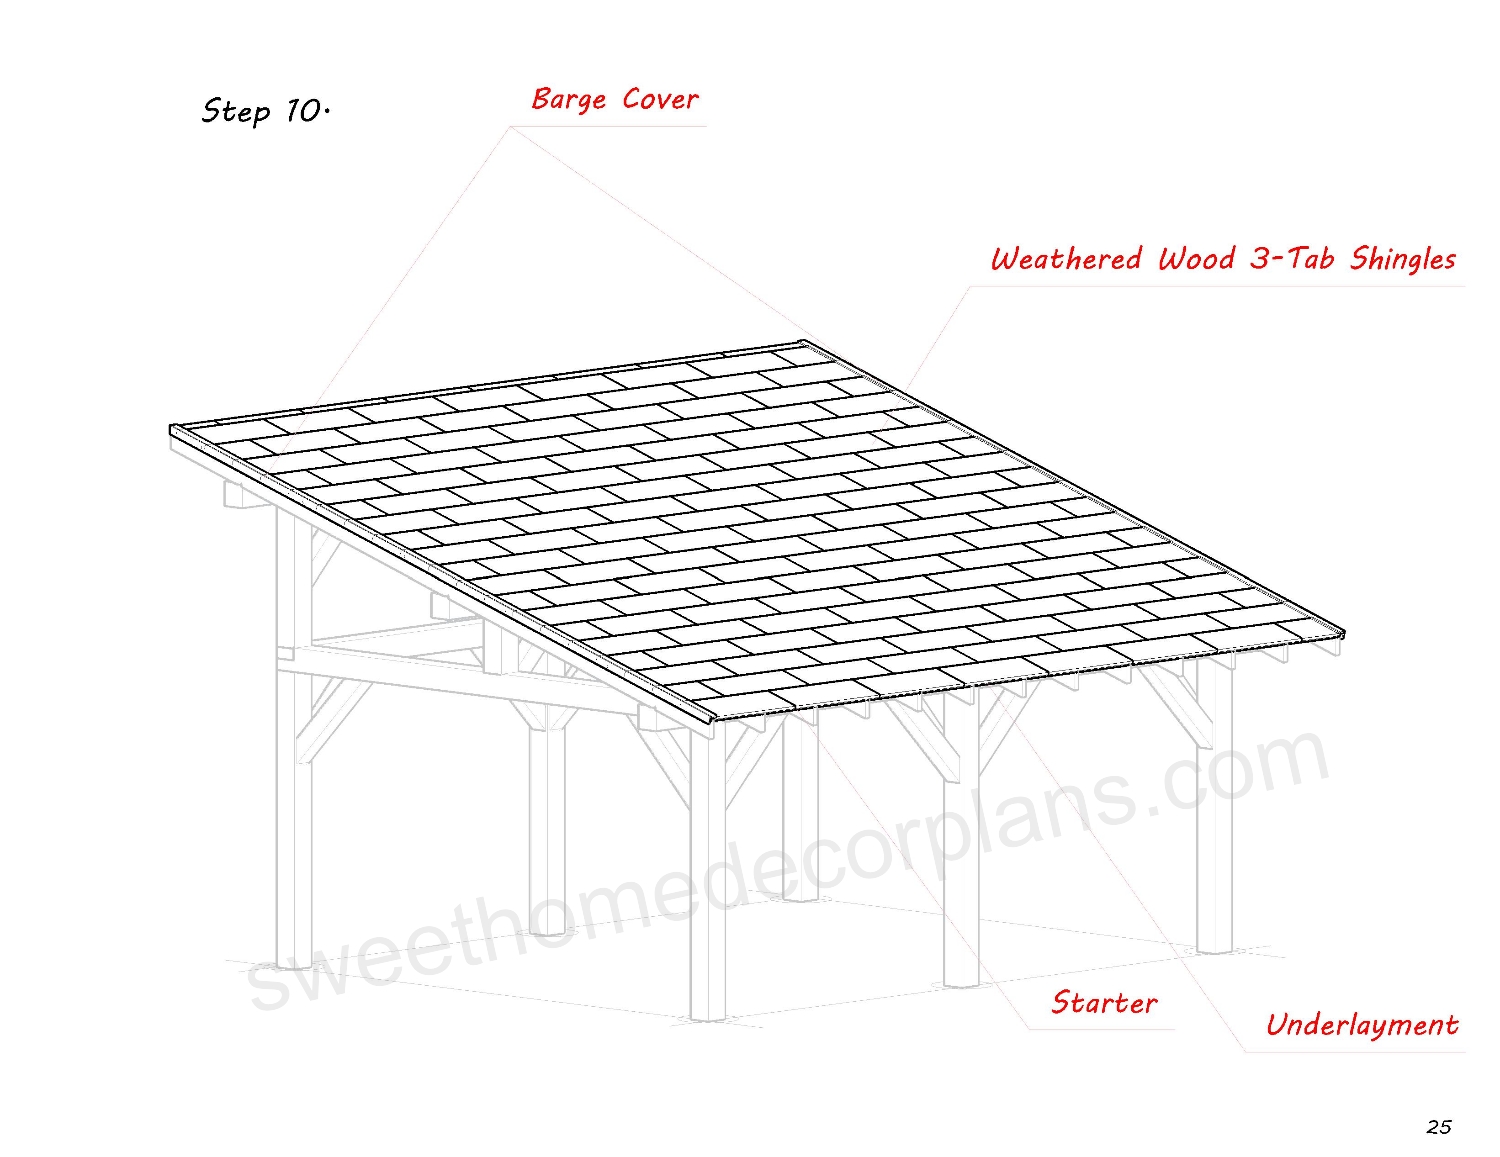 roof-assembly-diagram-16-х-20-lean-to-pavilion-plans